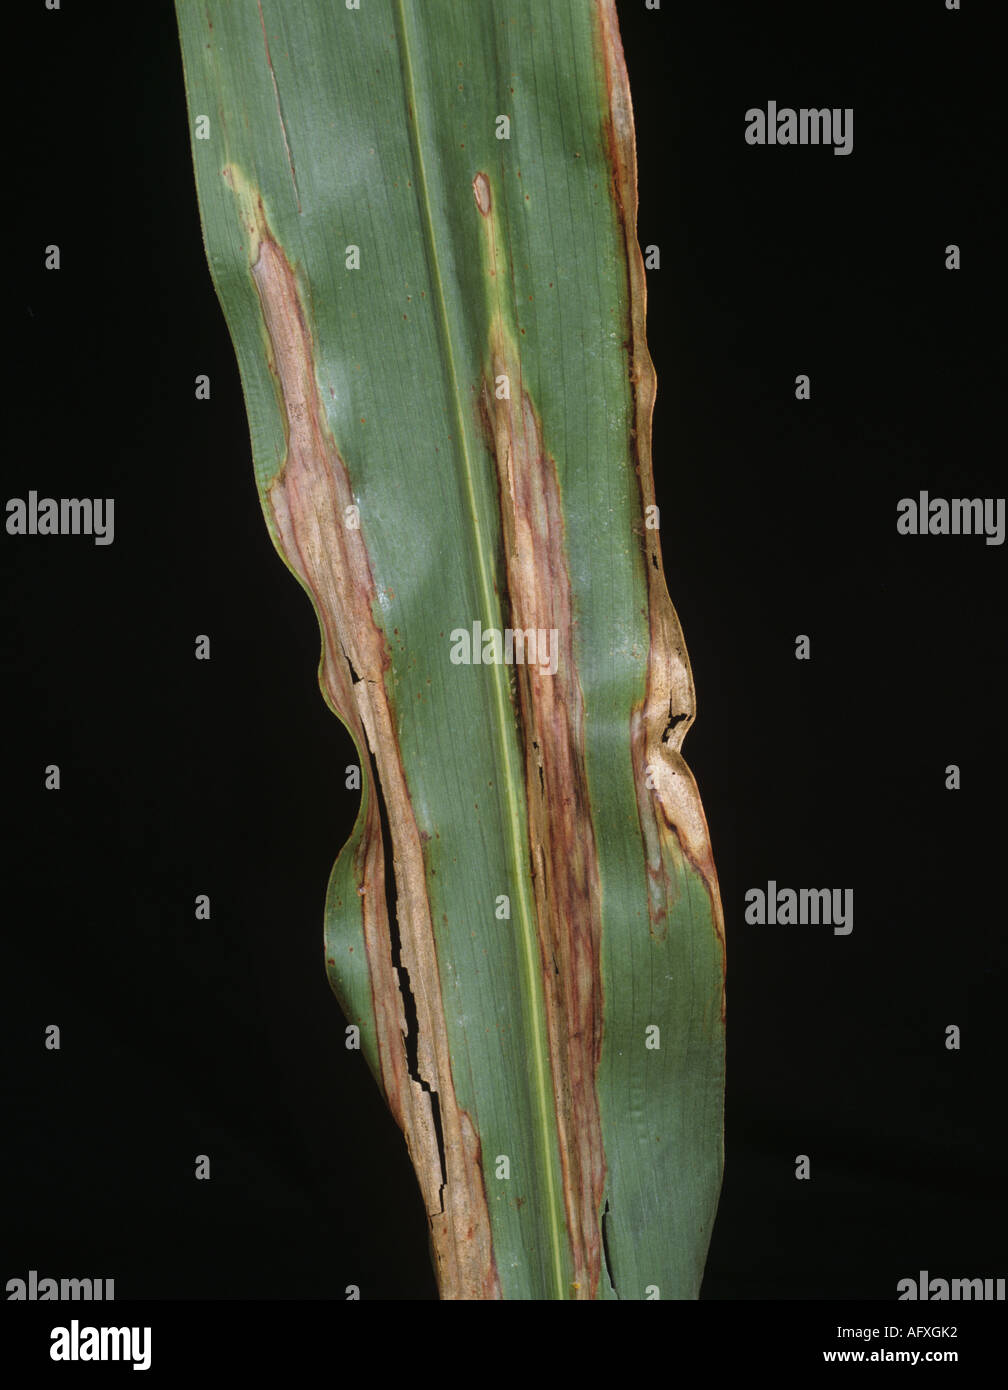 Northern leaf blight (Setosphaeria turcica) lesion on crop sorghum leaf Stock Photo